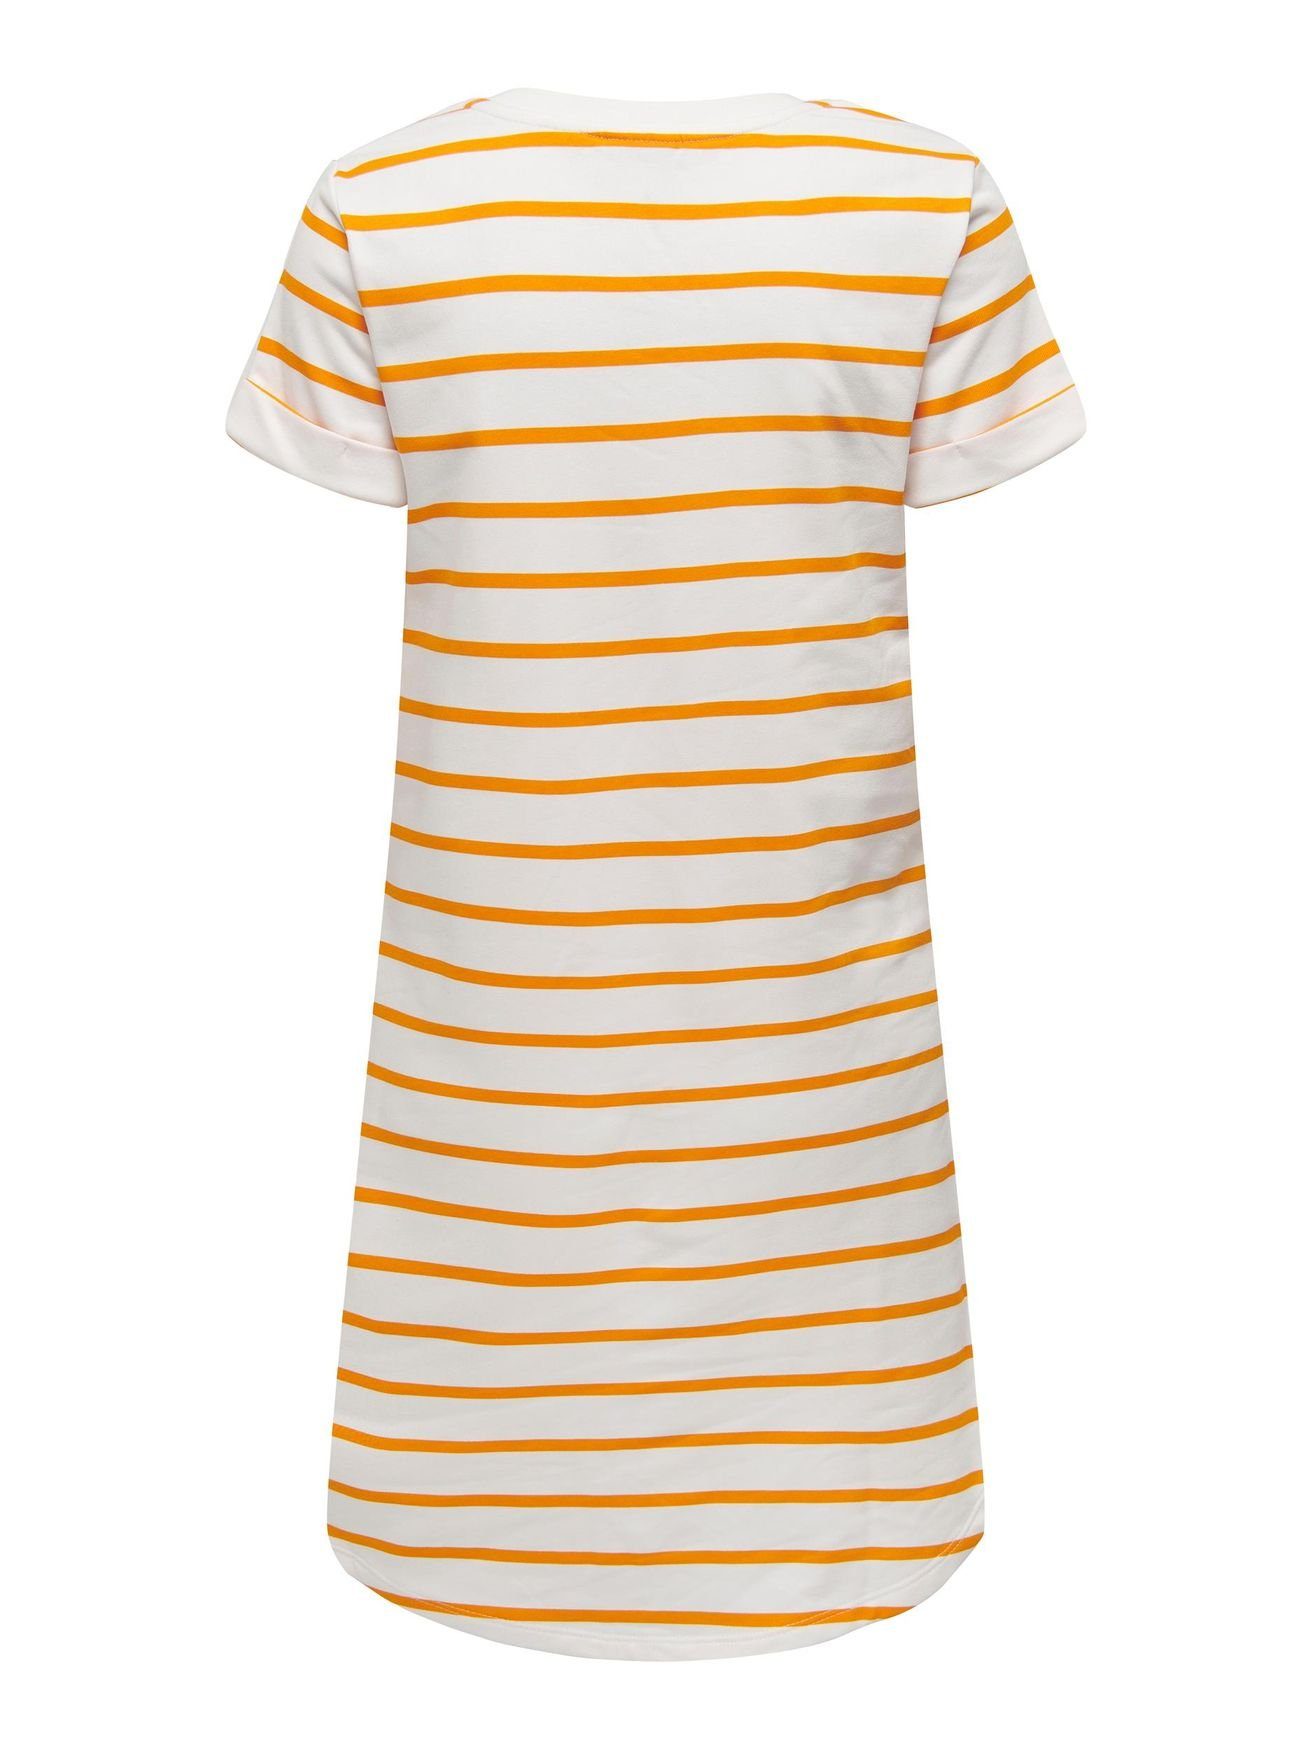 JACQUELINE de YONG JDYIVY Orange (knielang) T-Shirt Knielang Shirtkleid in Gestreift Kurzes 4989 Kleid